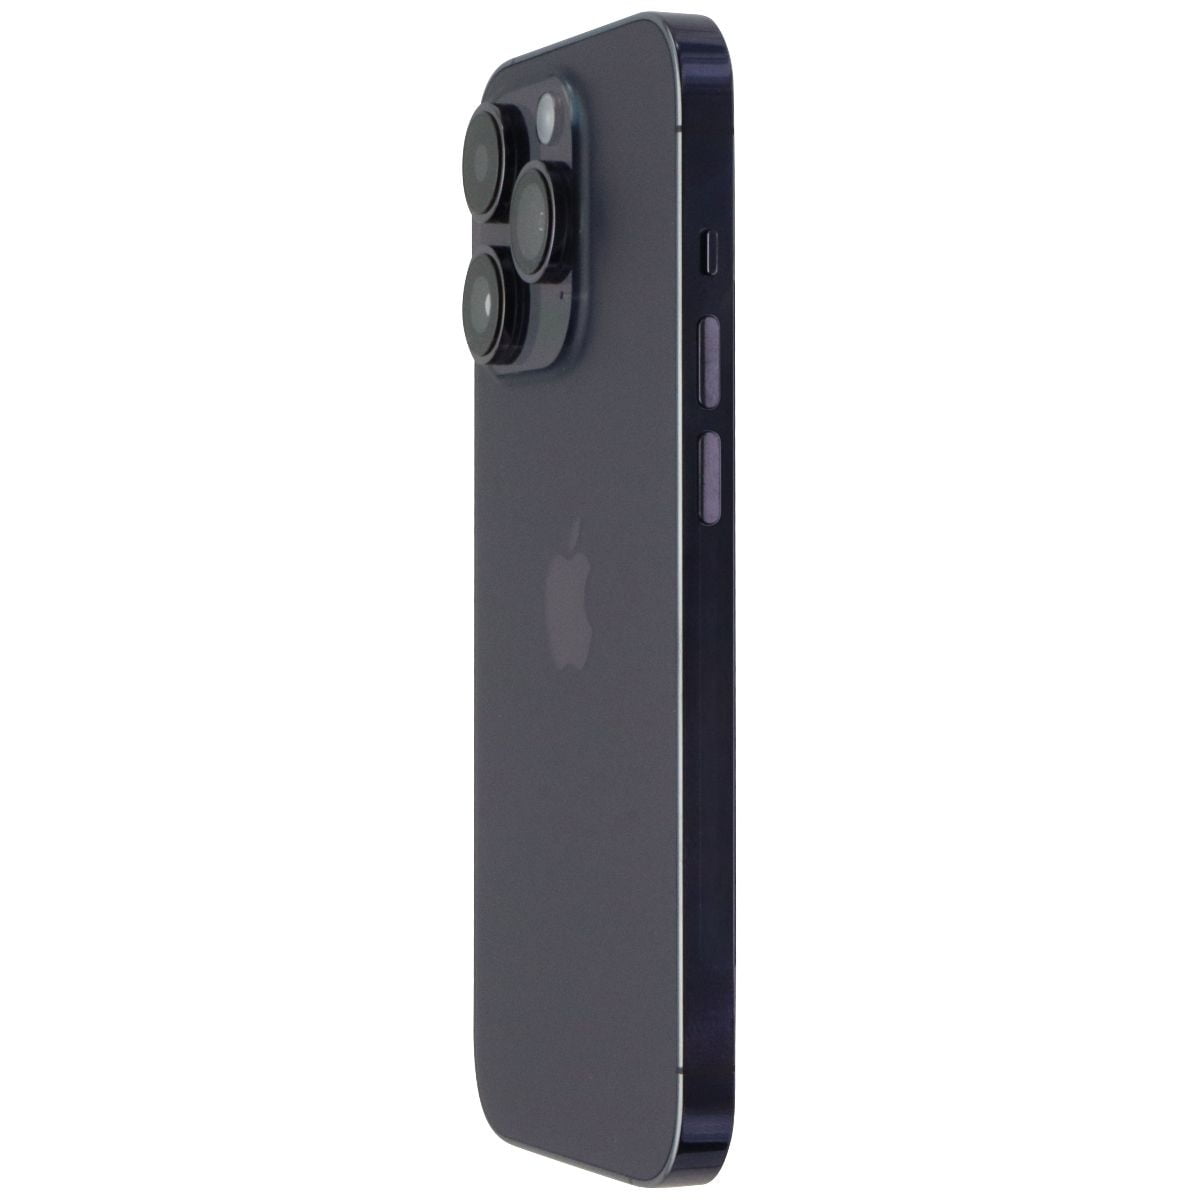 Restored Apple iPhone 14 Pro Max - Carrier Unlocked - 512GB Silver -  MQ8Y3LL/A (Refurbished) 